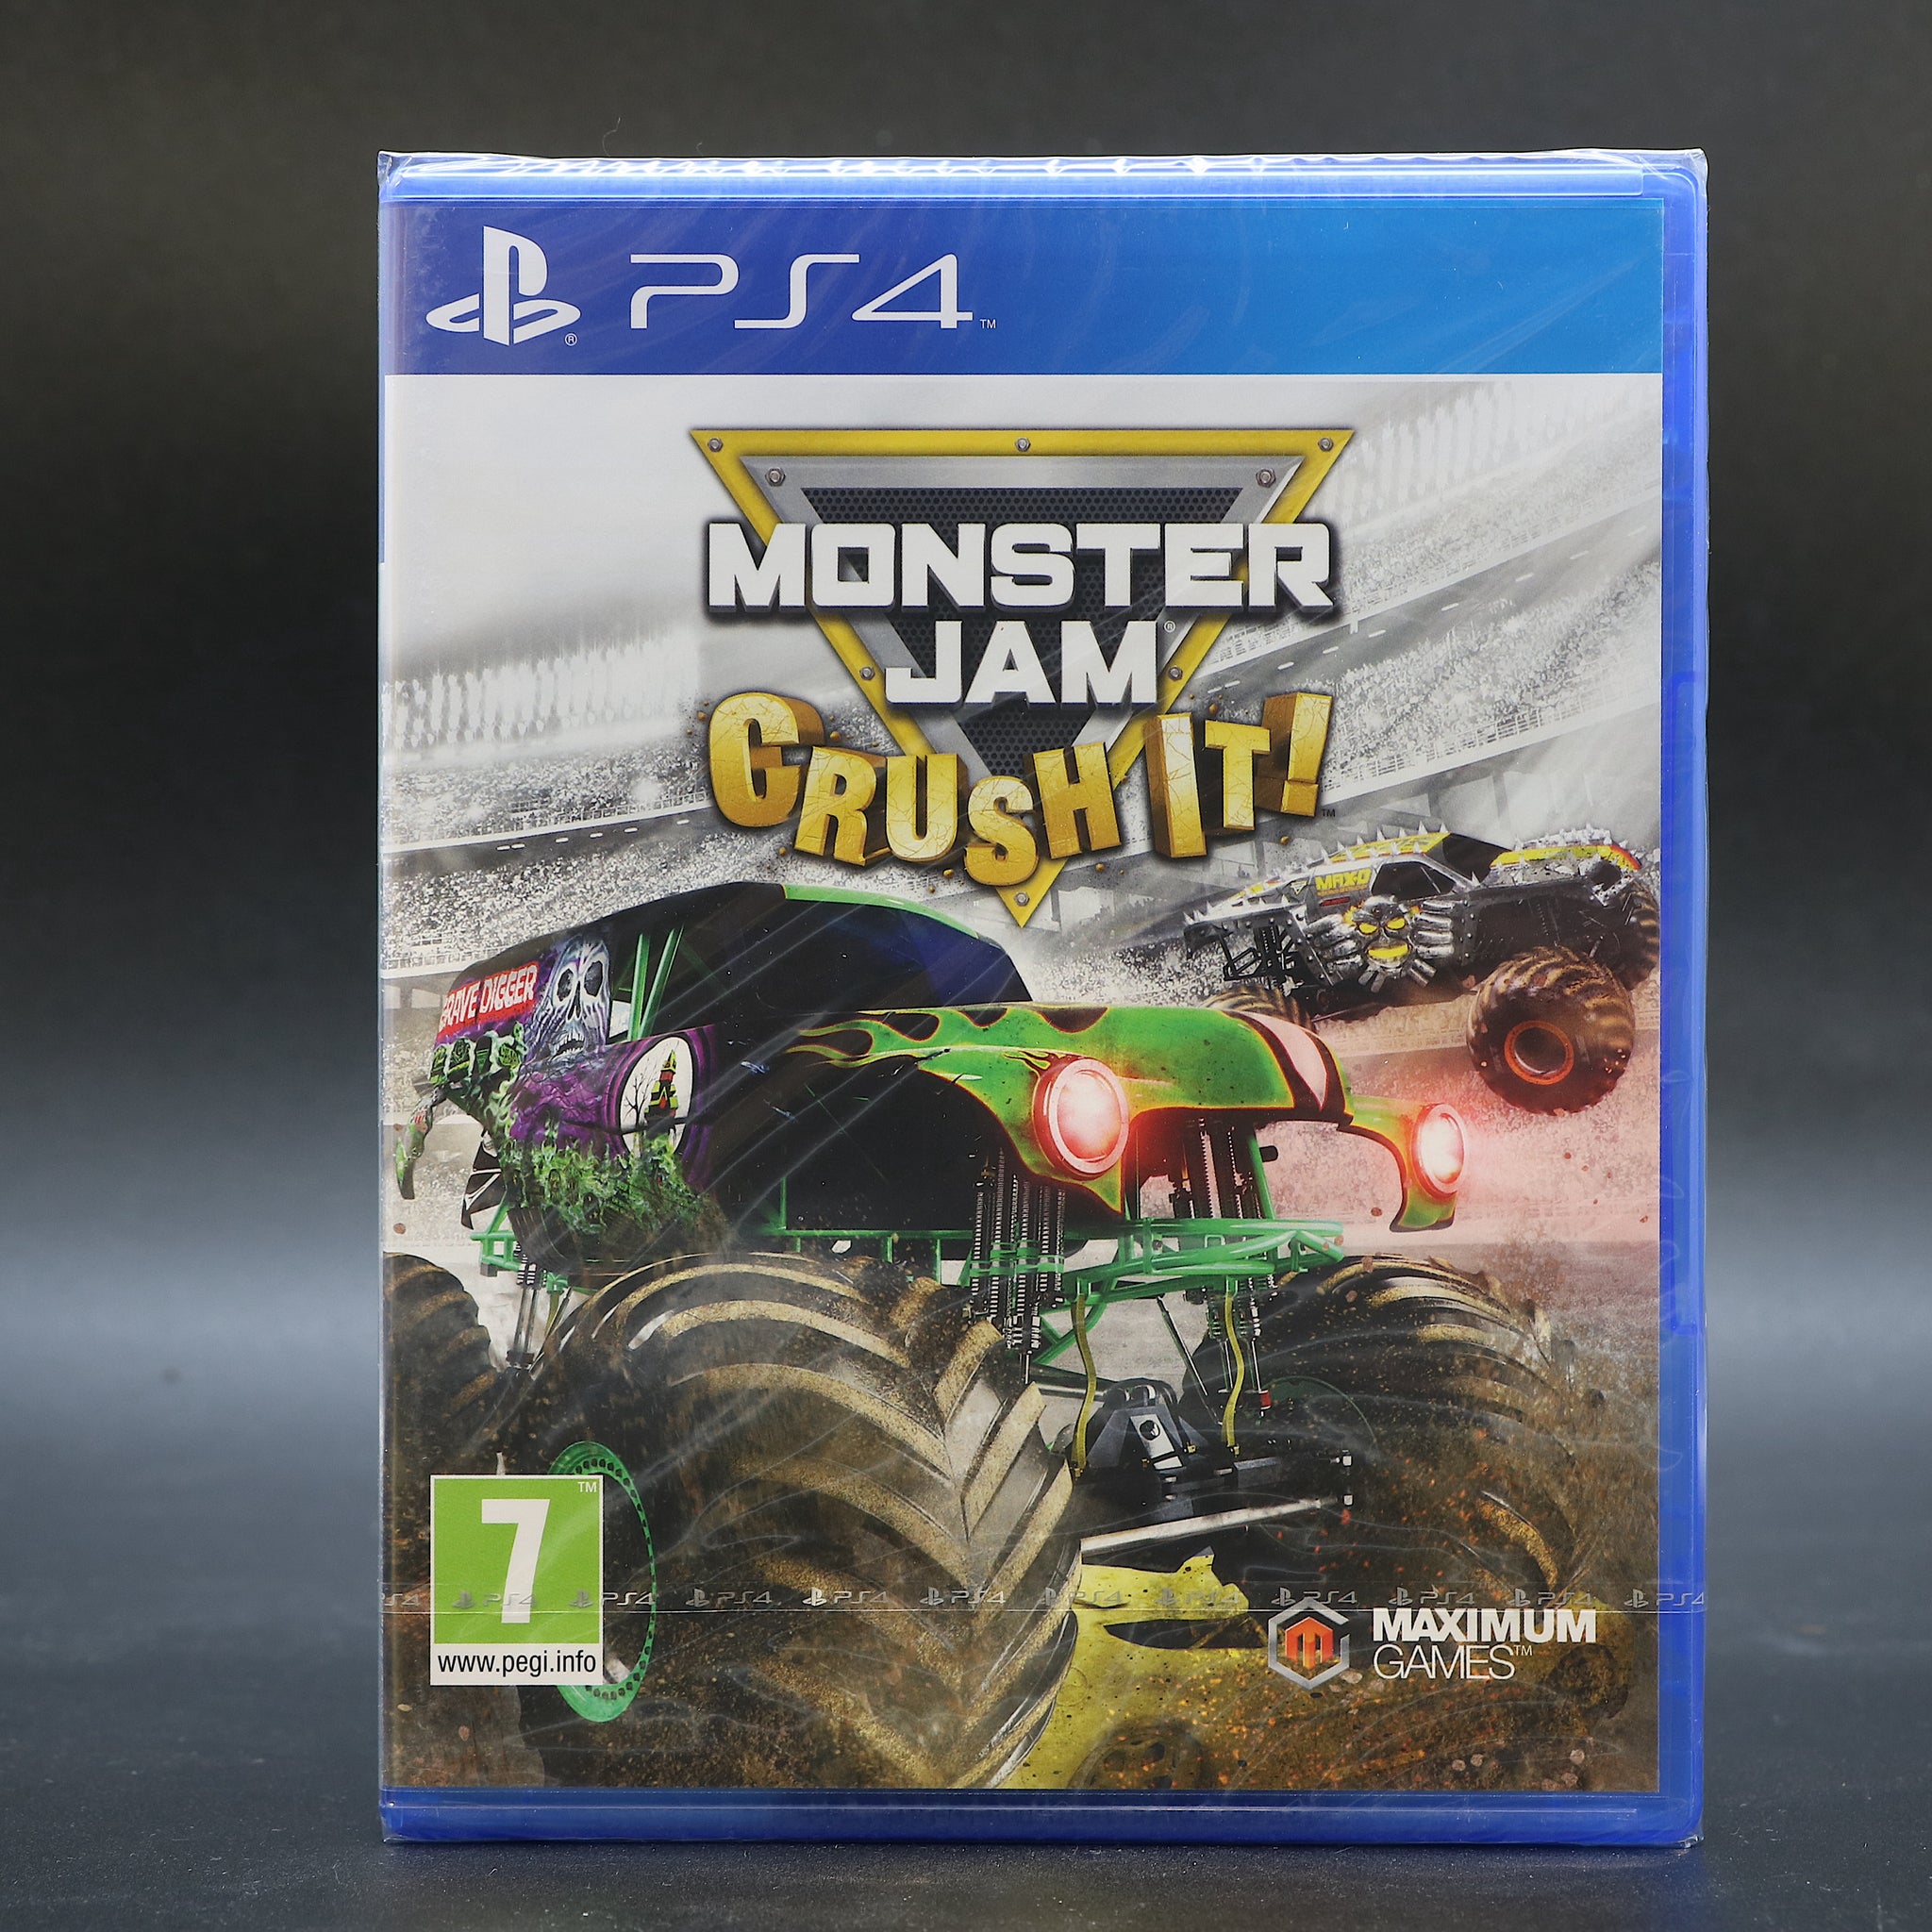 Monster Jam - Crush It! | Trucks| Sony PS4 Racing Game | New & Sealed